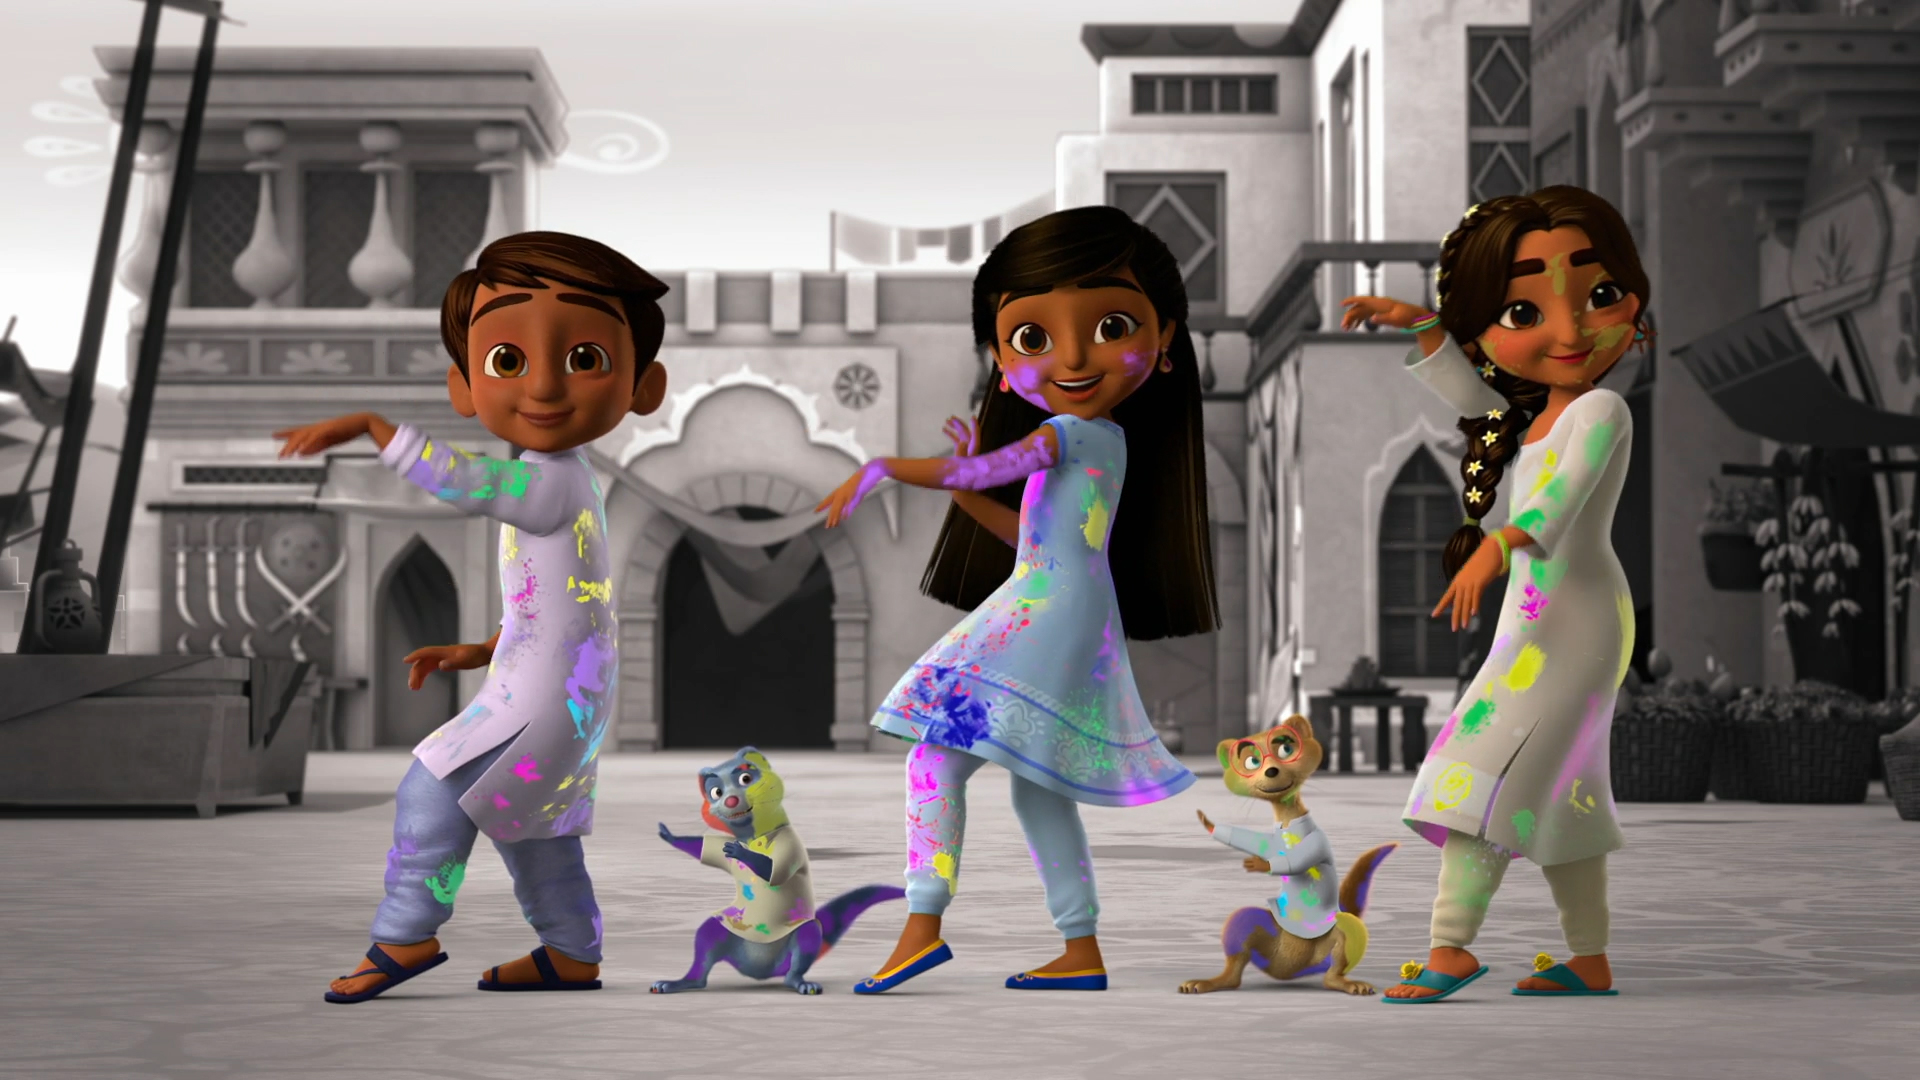 Holi-themed episode of Disney's “Mira, Royal Detective” | News India Times